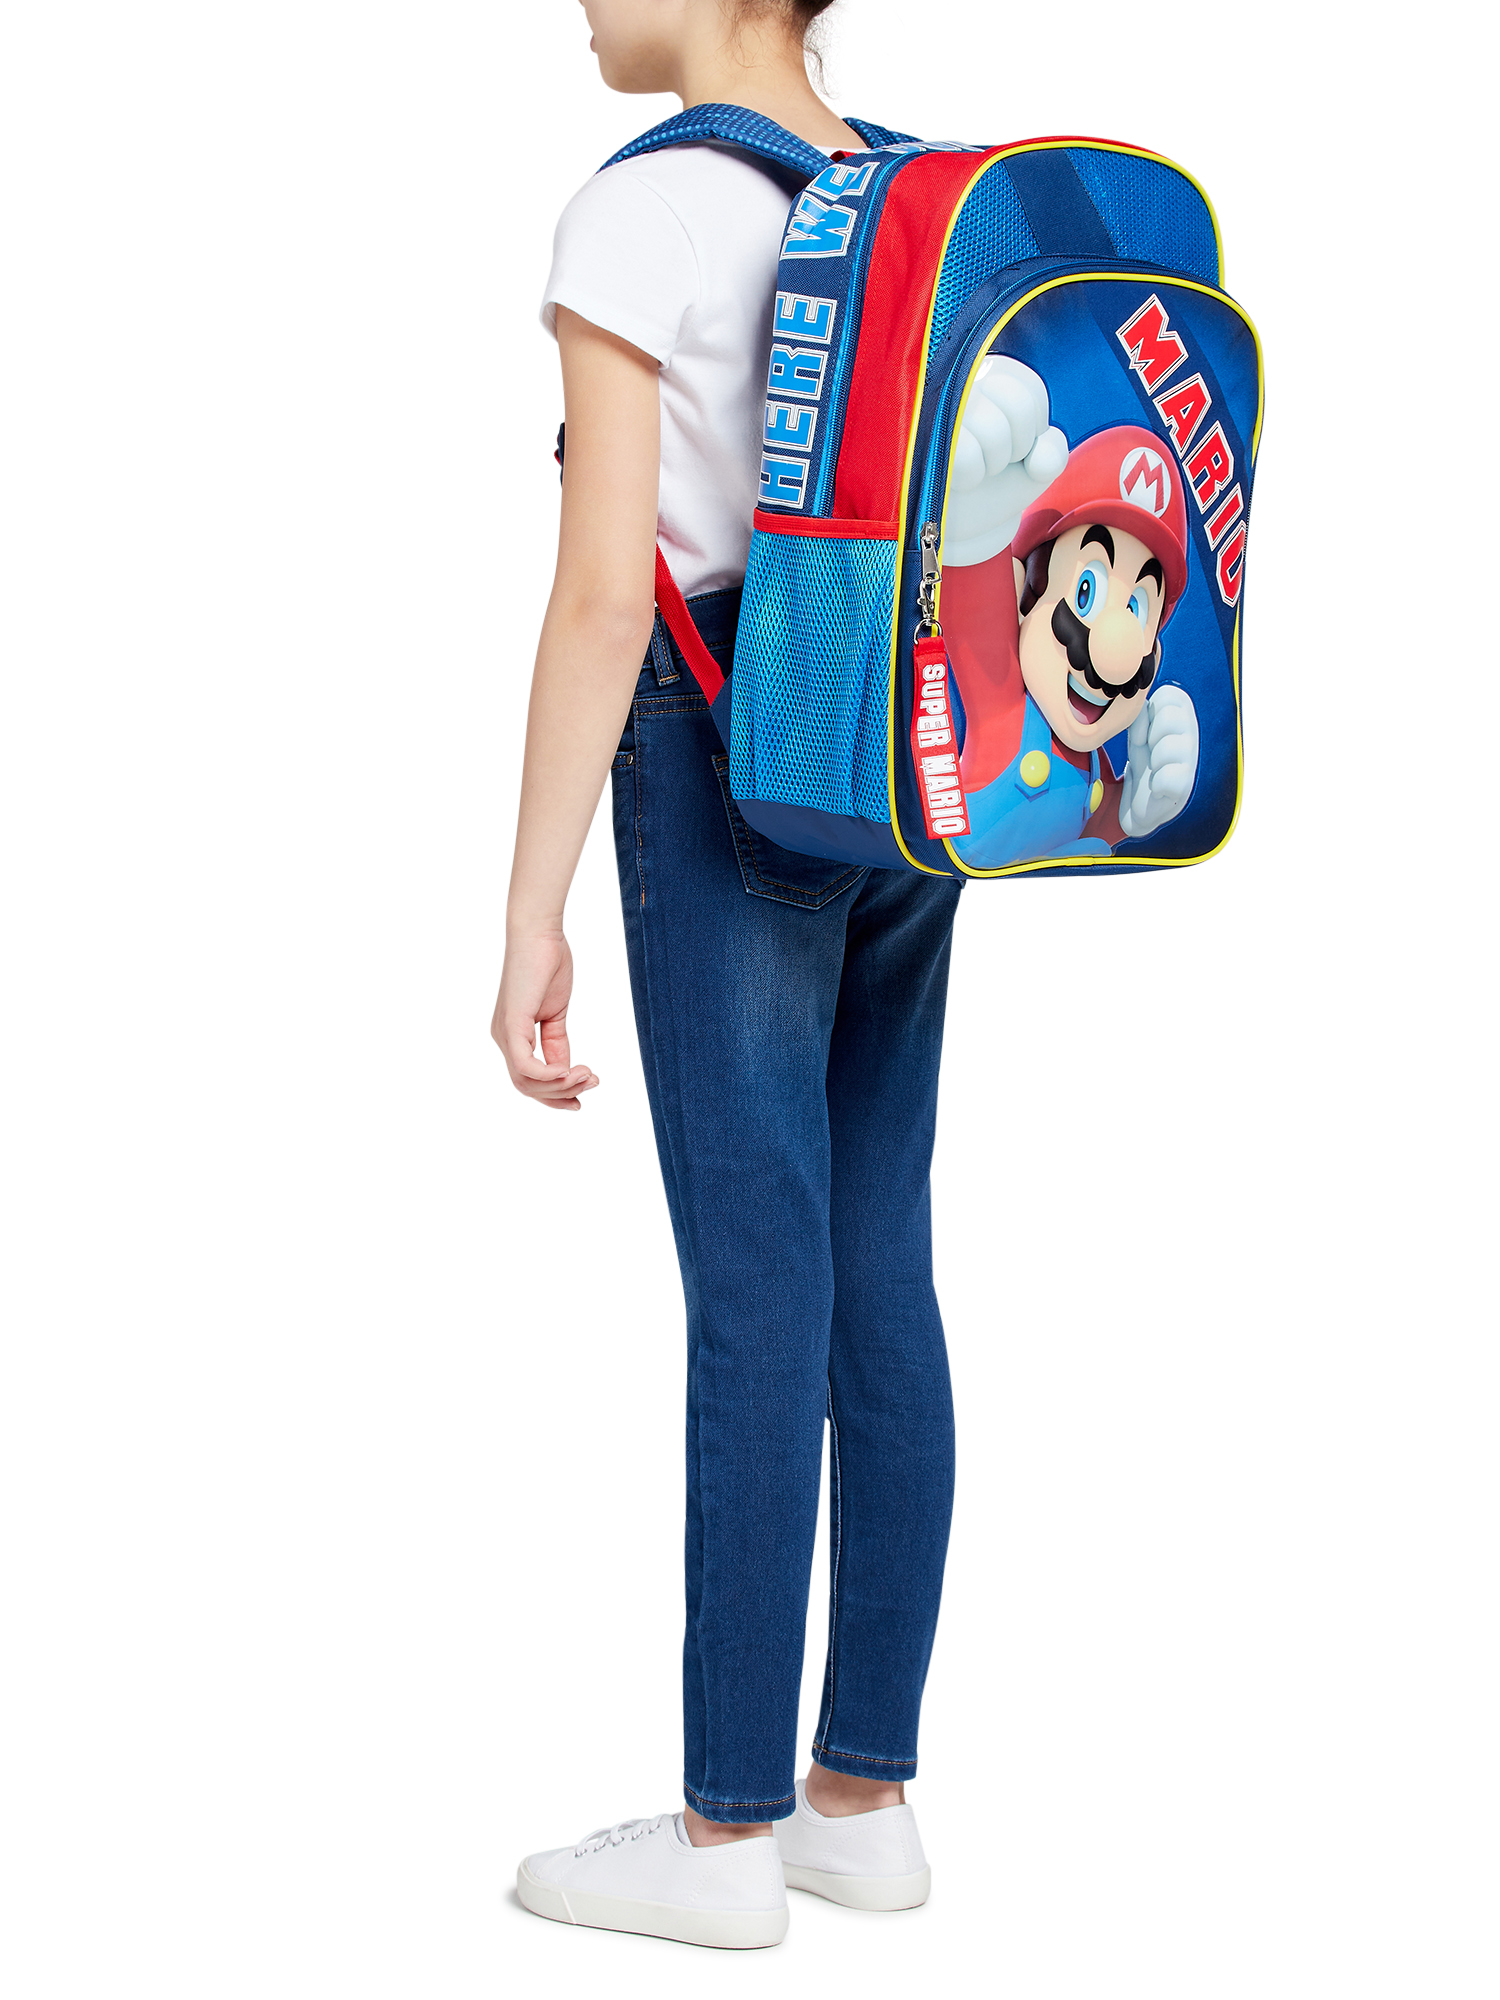 Nintendo Super Mario Bros. Kids’ Backpack Blue Red - image 5 of 5